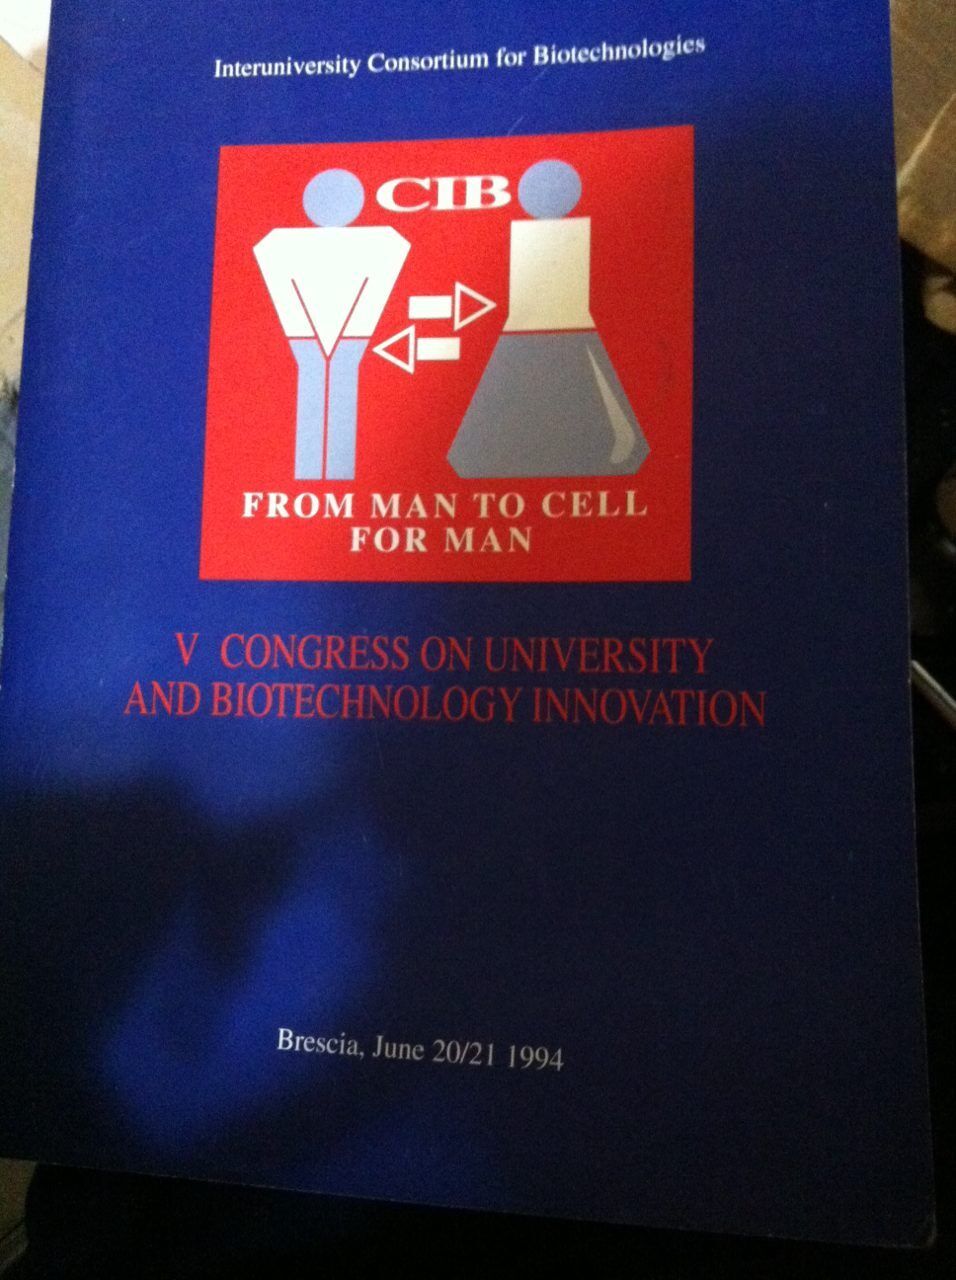 V congress on university and biotechnology innovation - Aa.vv. - 1994 - lo